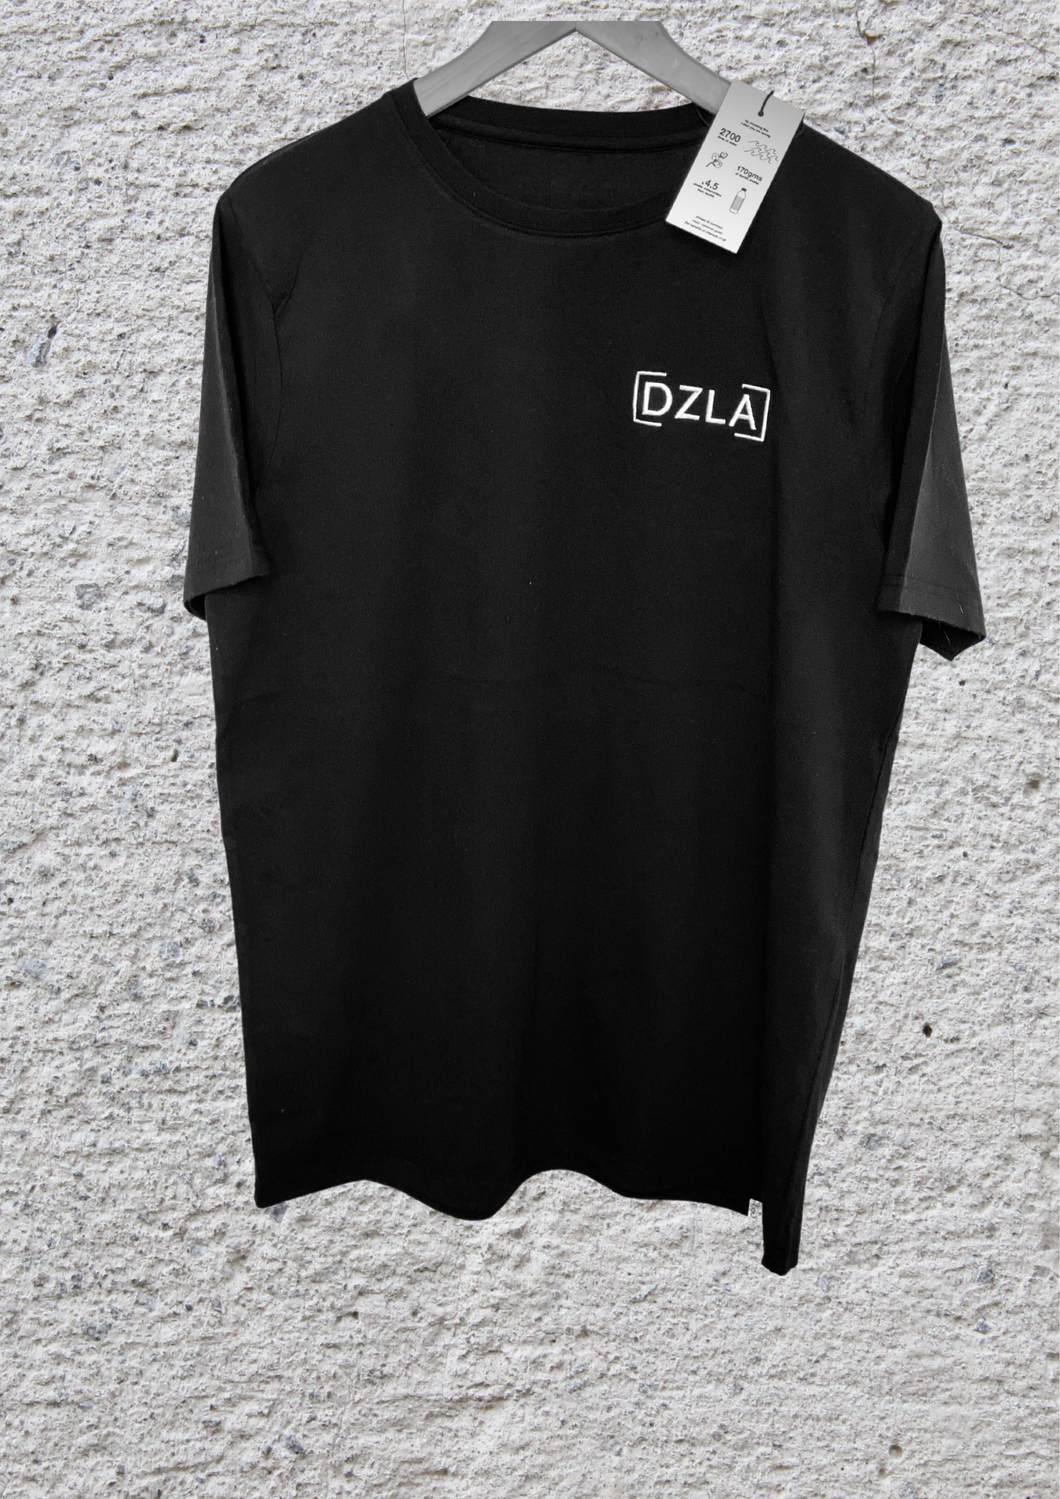 DZLA 'Our Planet' Premium Recycled Men's T-Shirt